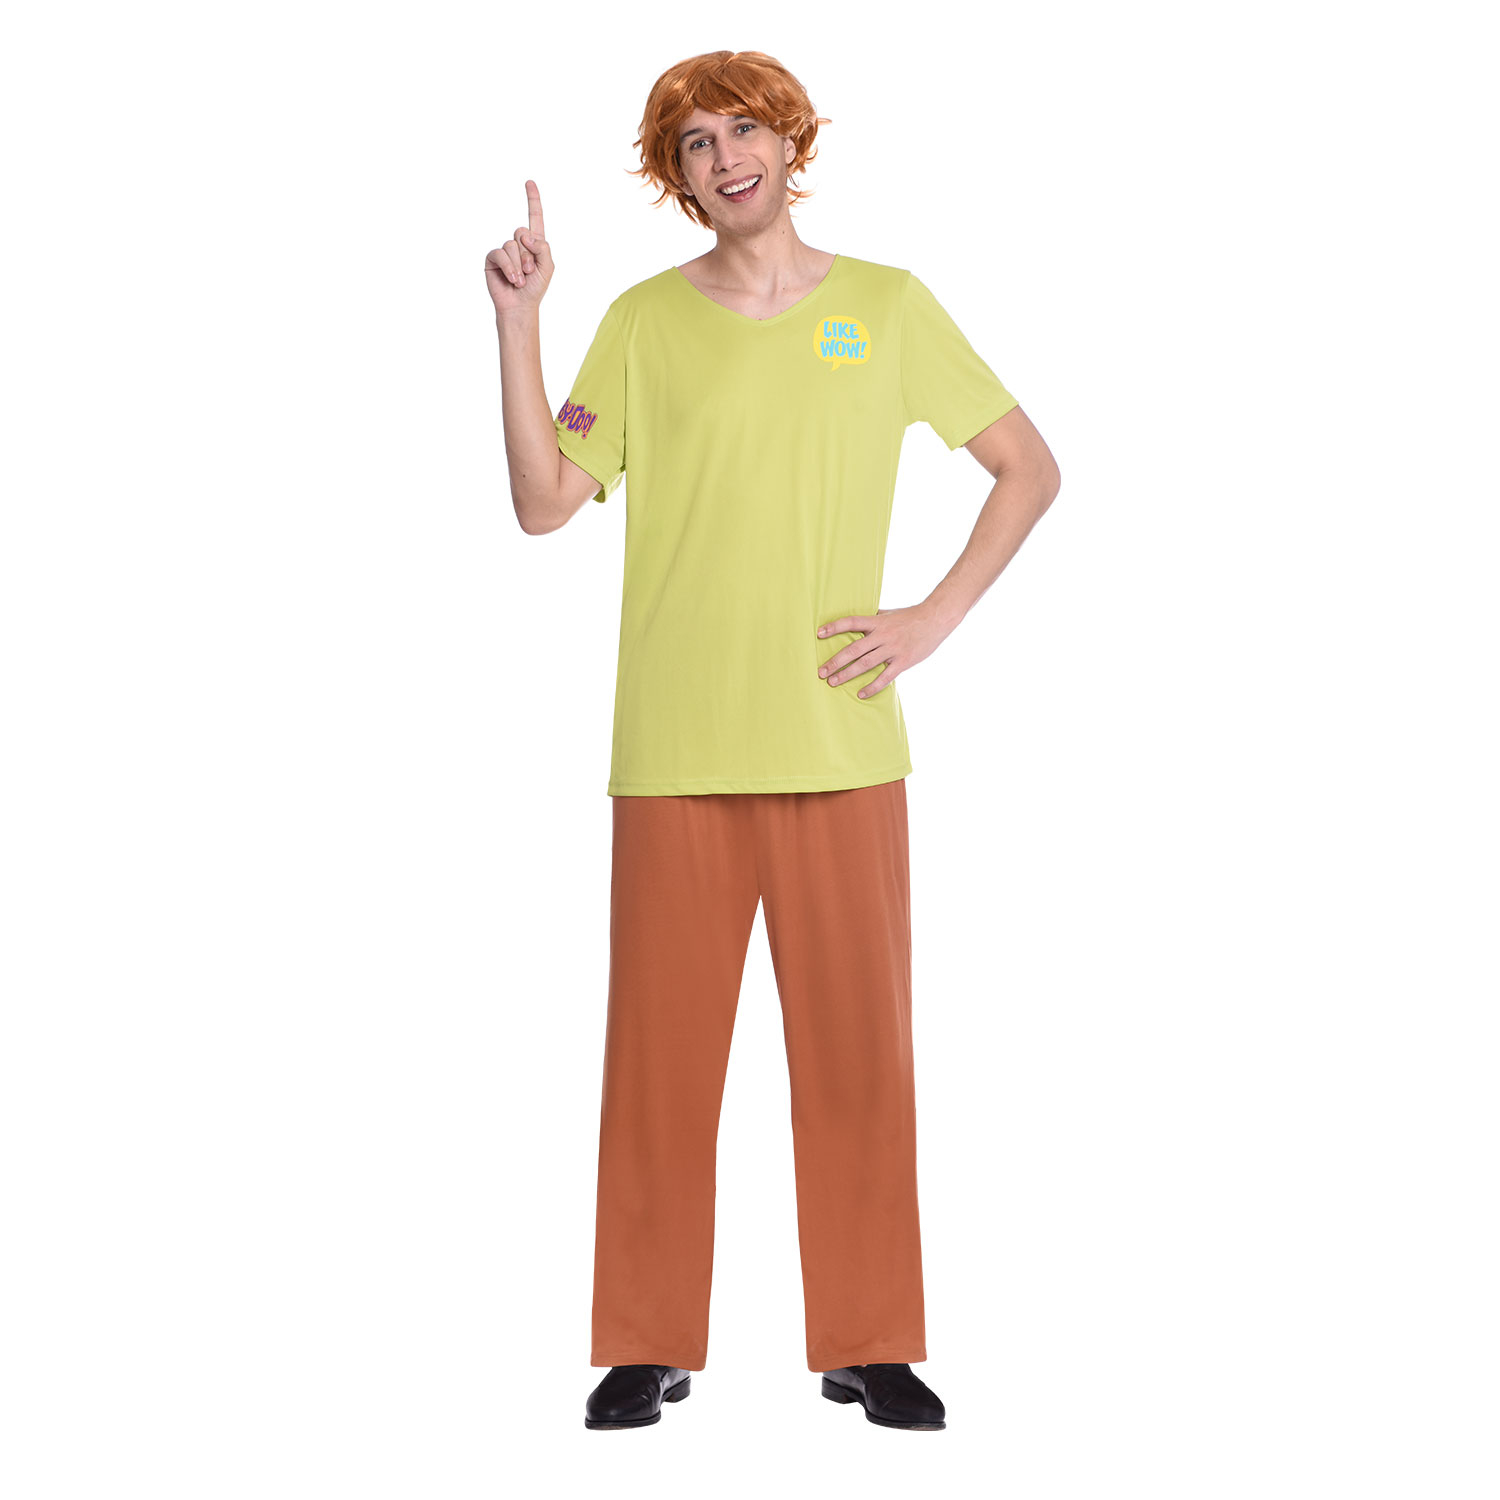 Shaggy Costume - Size Medium - 1 PC. 